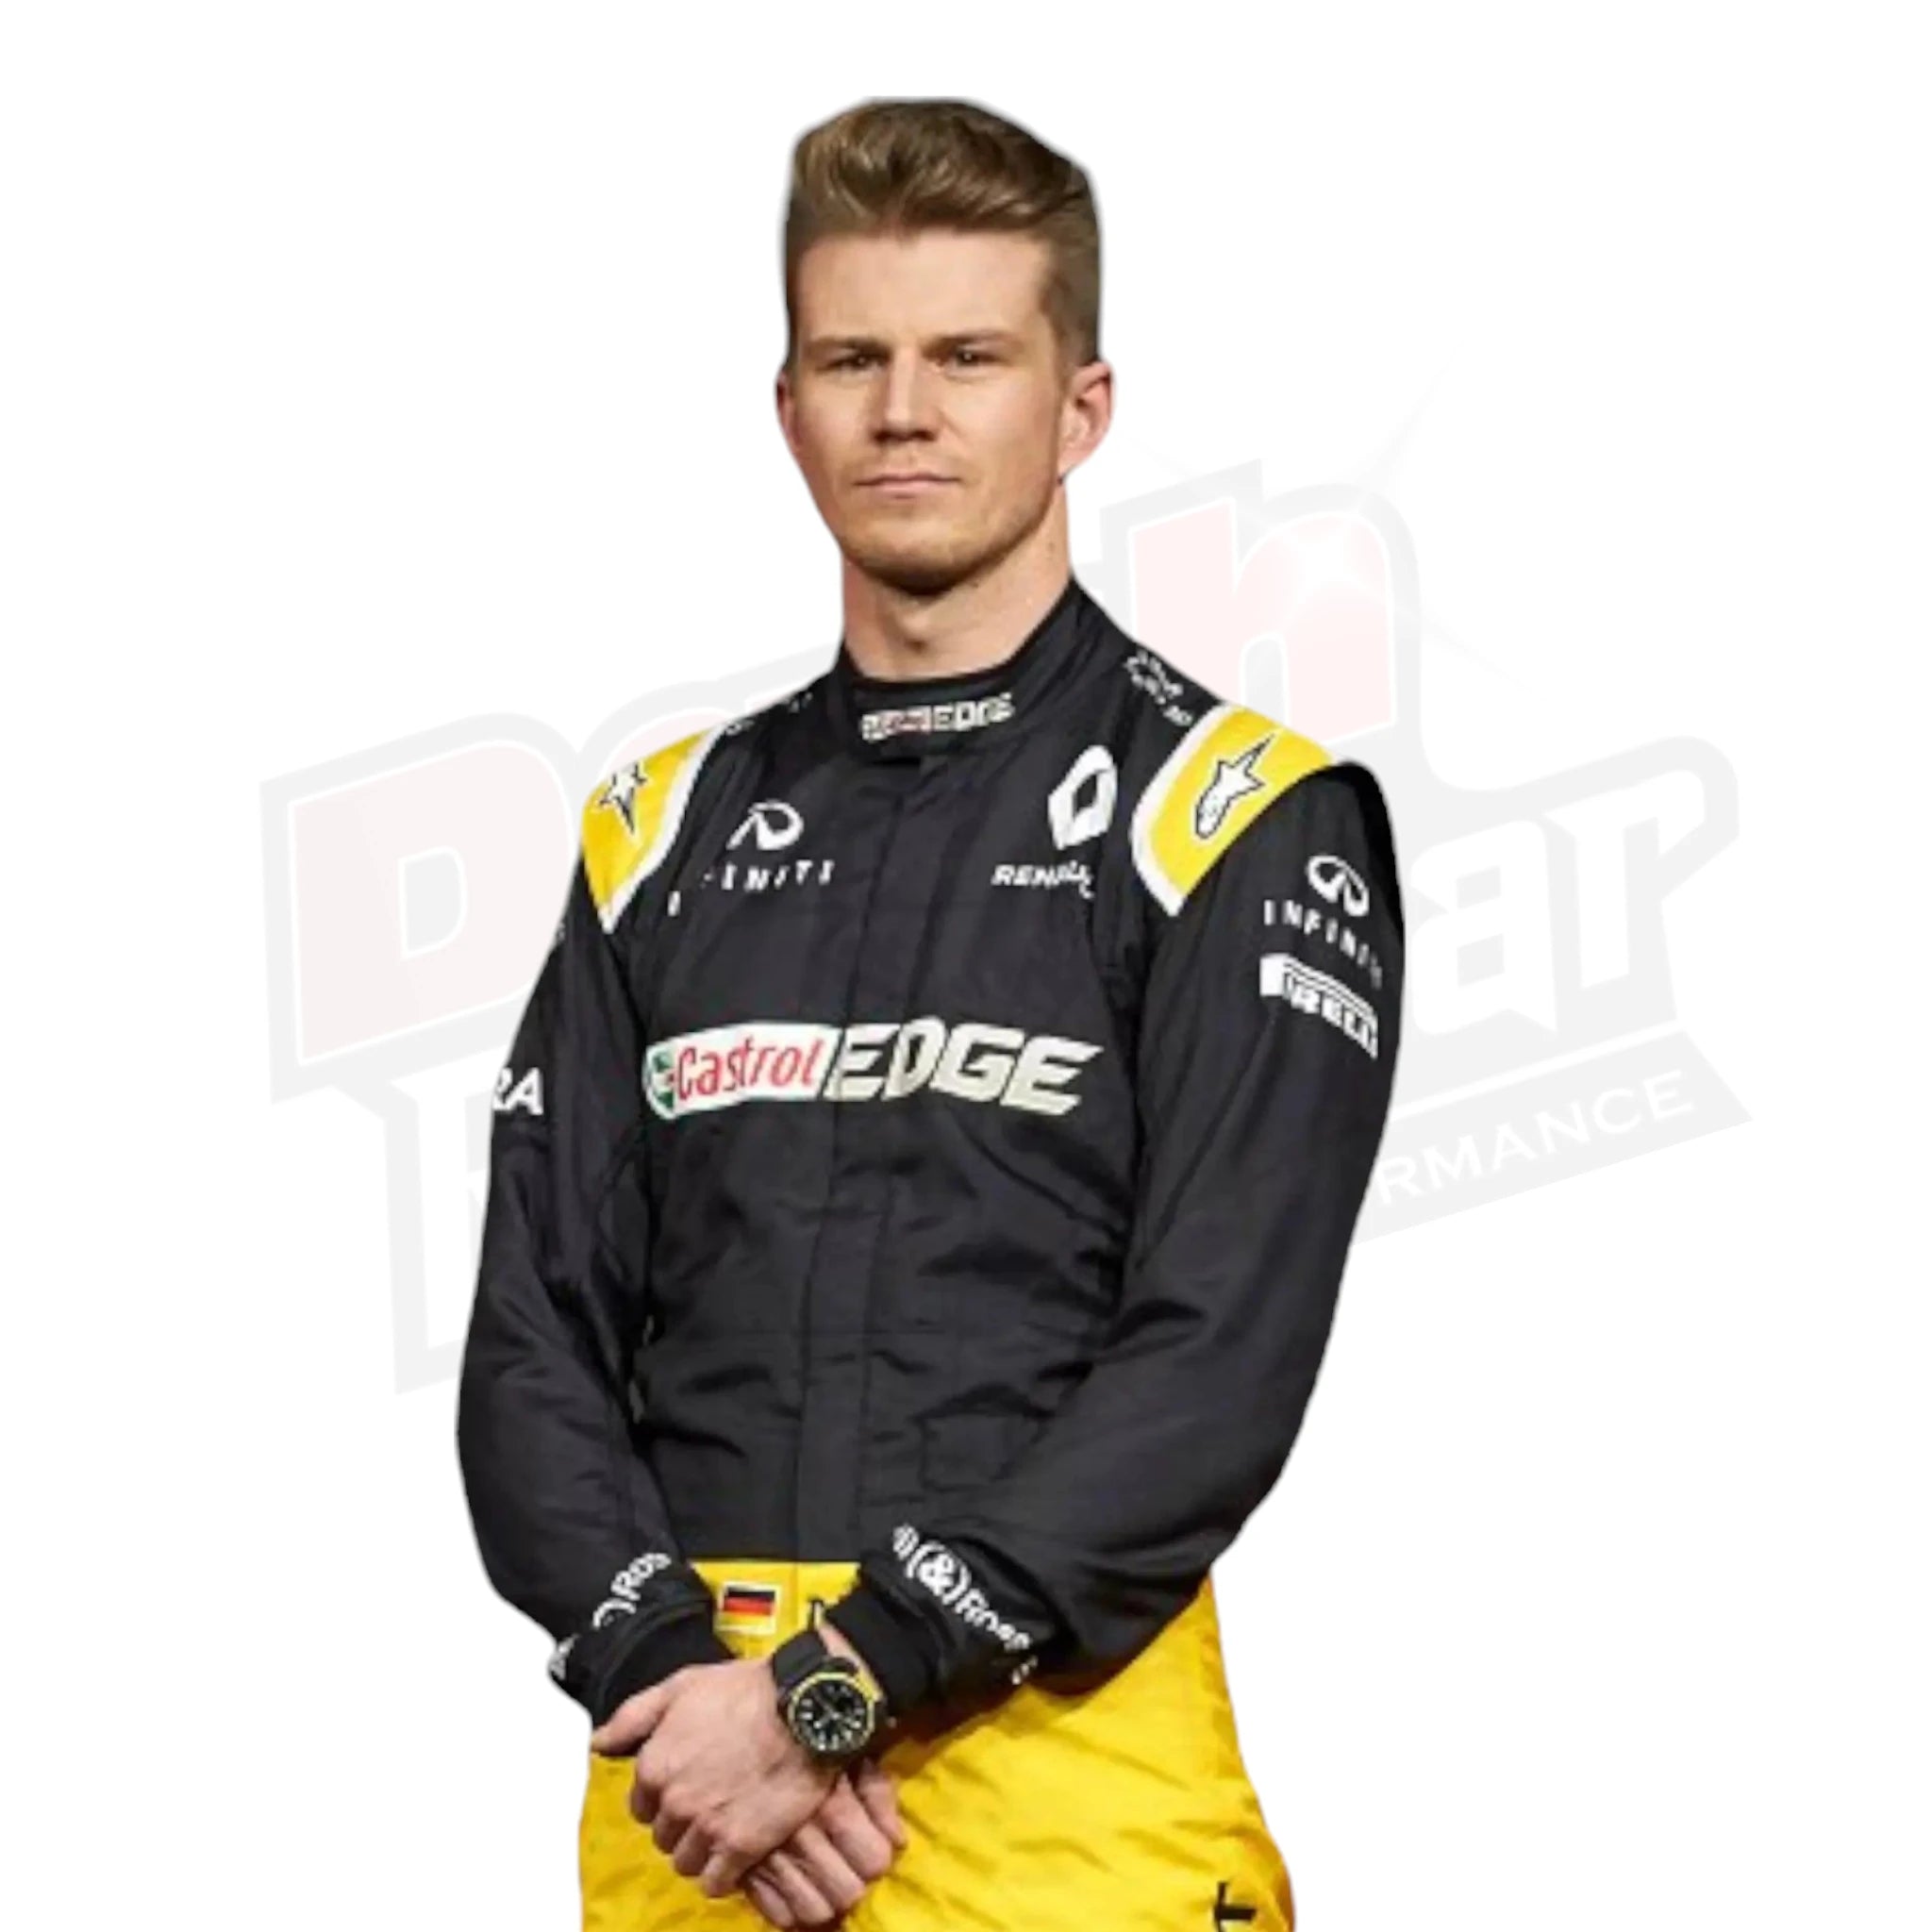 2017 Nico Hulkenberg Renault F1 Race Suit